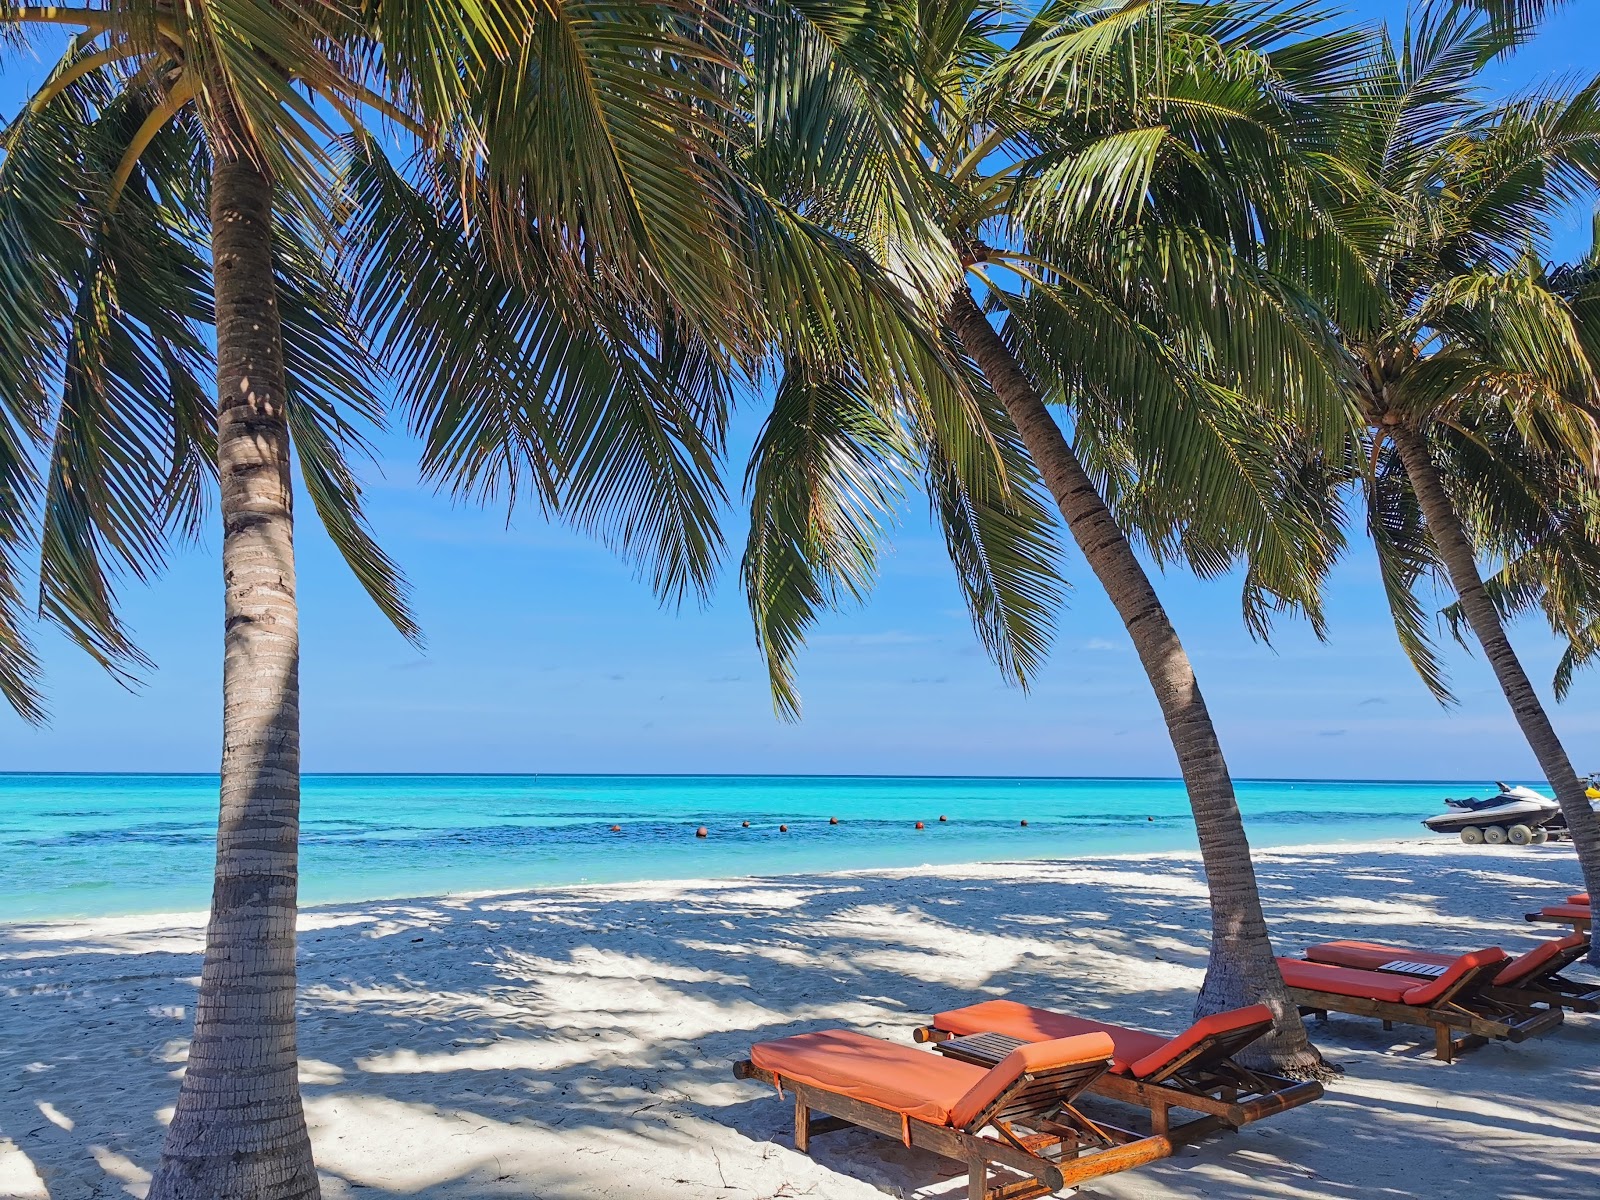 Foto von Club Med Kani island mit geräumiger strand